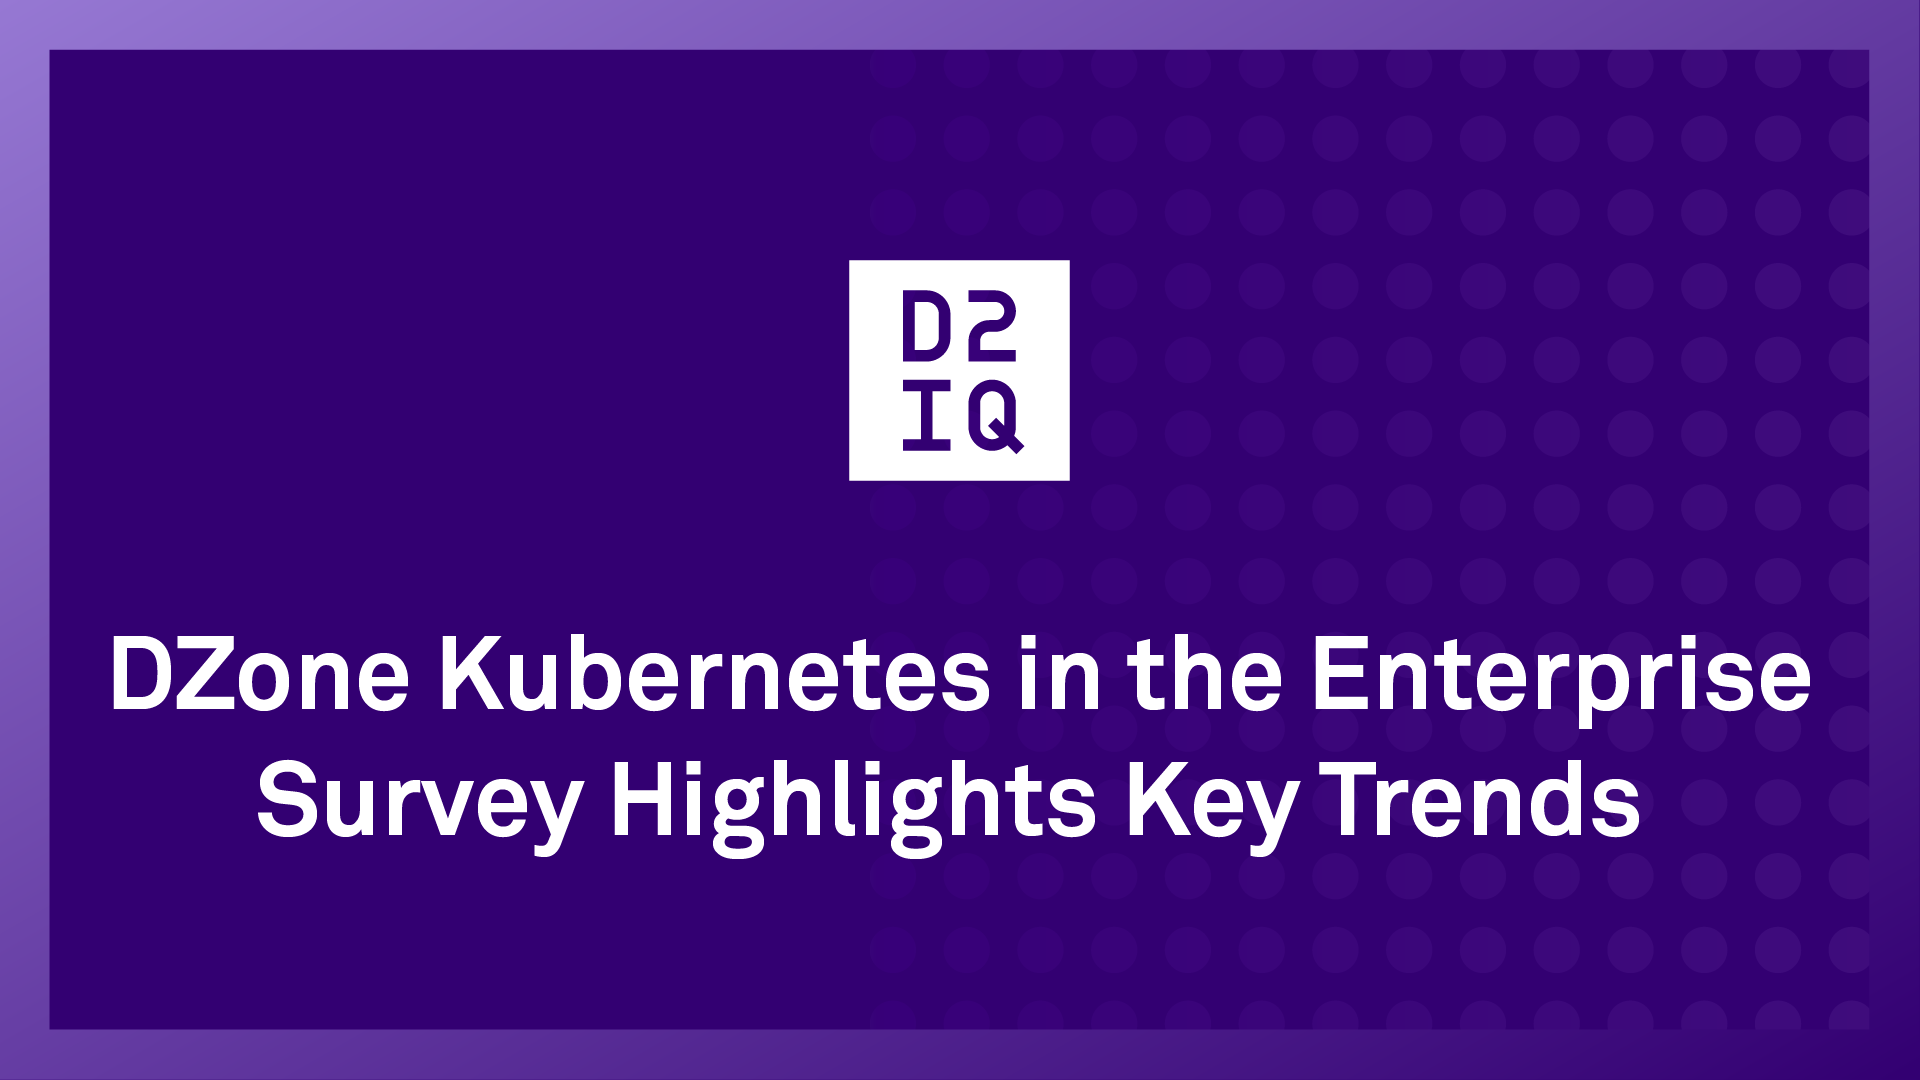 Latest DZone Kubernetes in the Enterprise Survey Highlights Key Trends